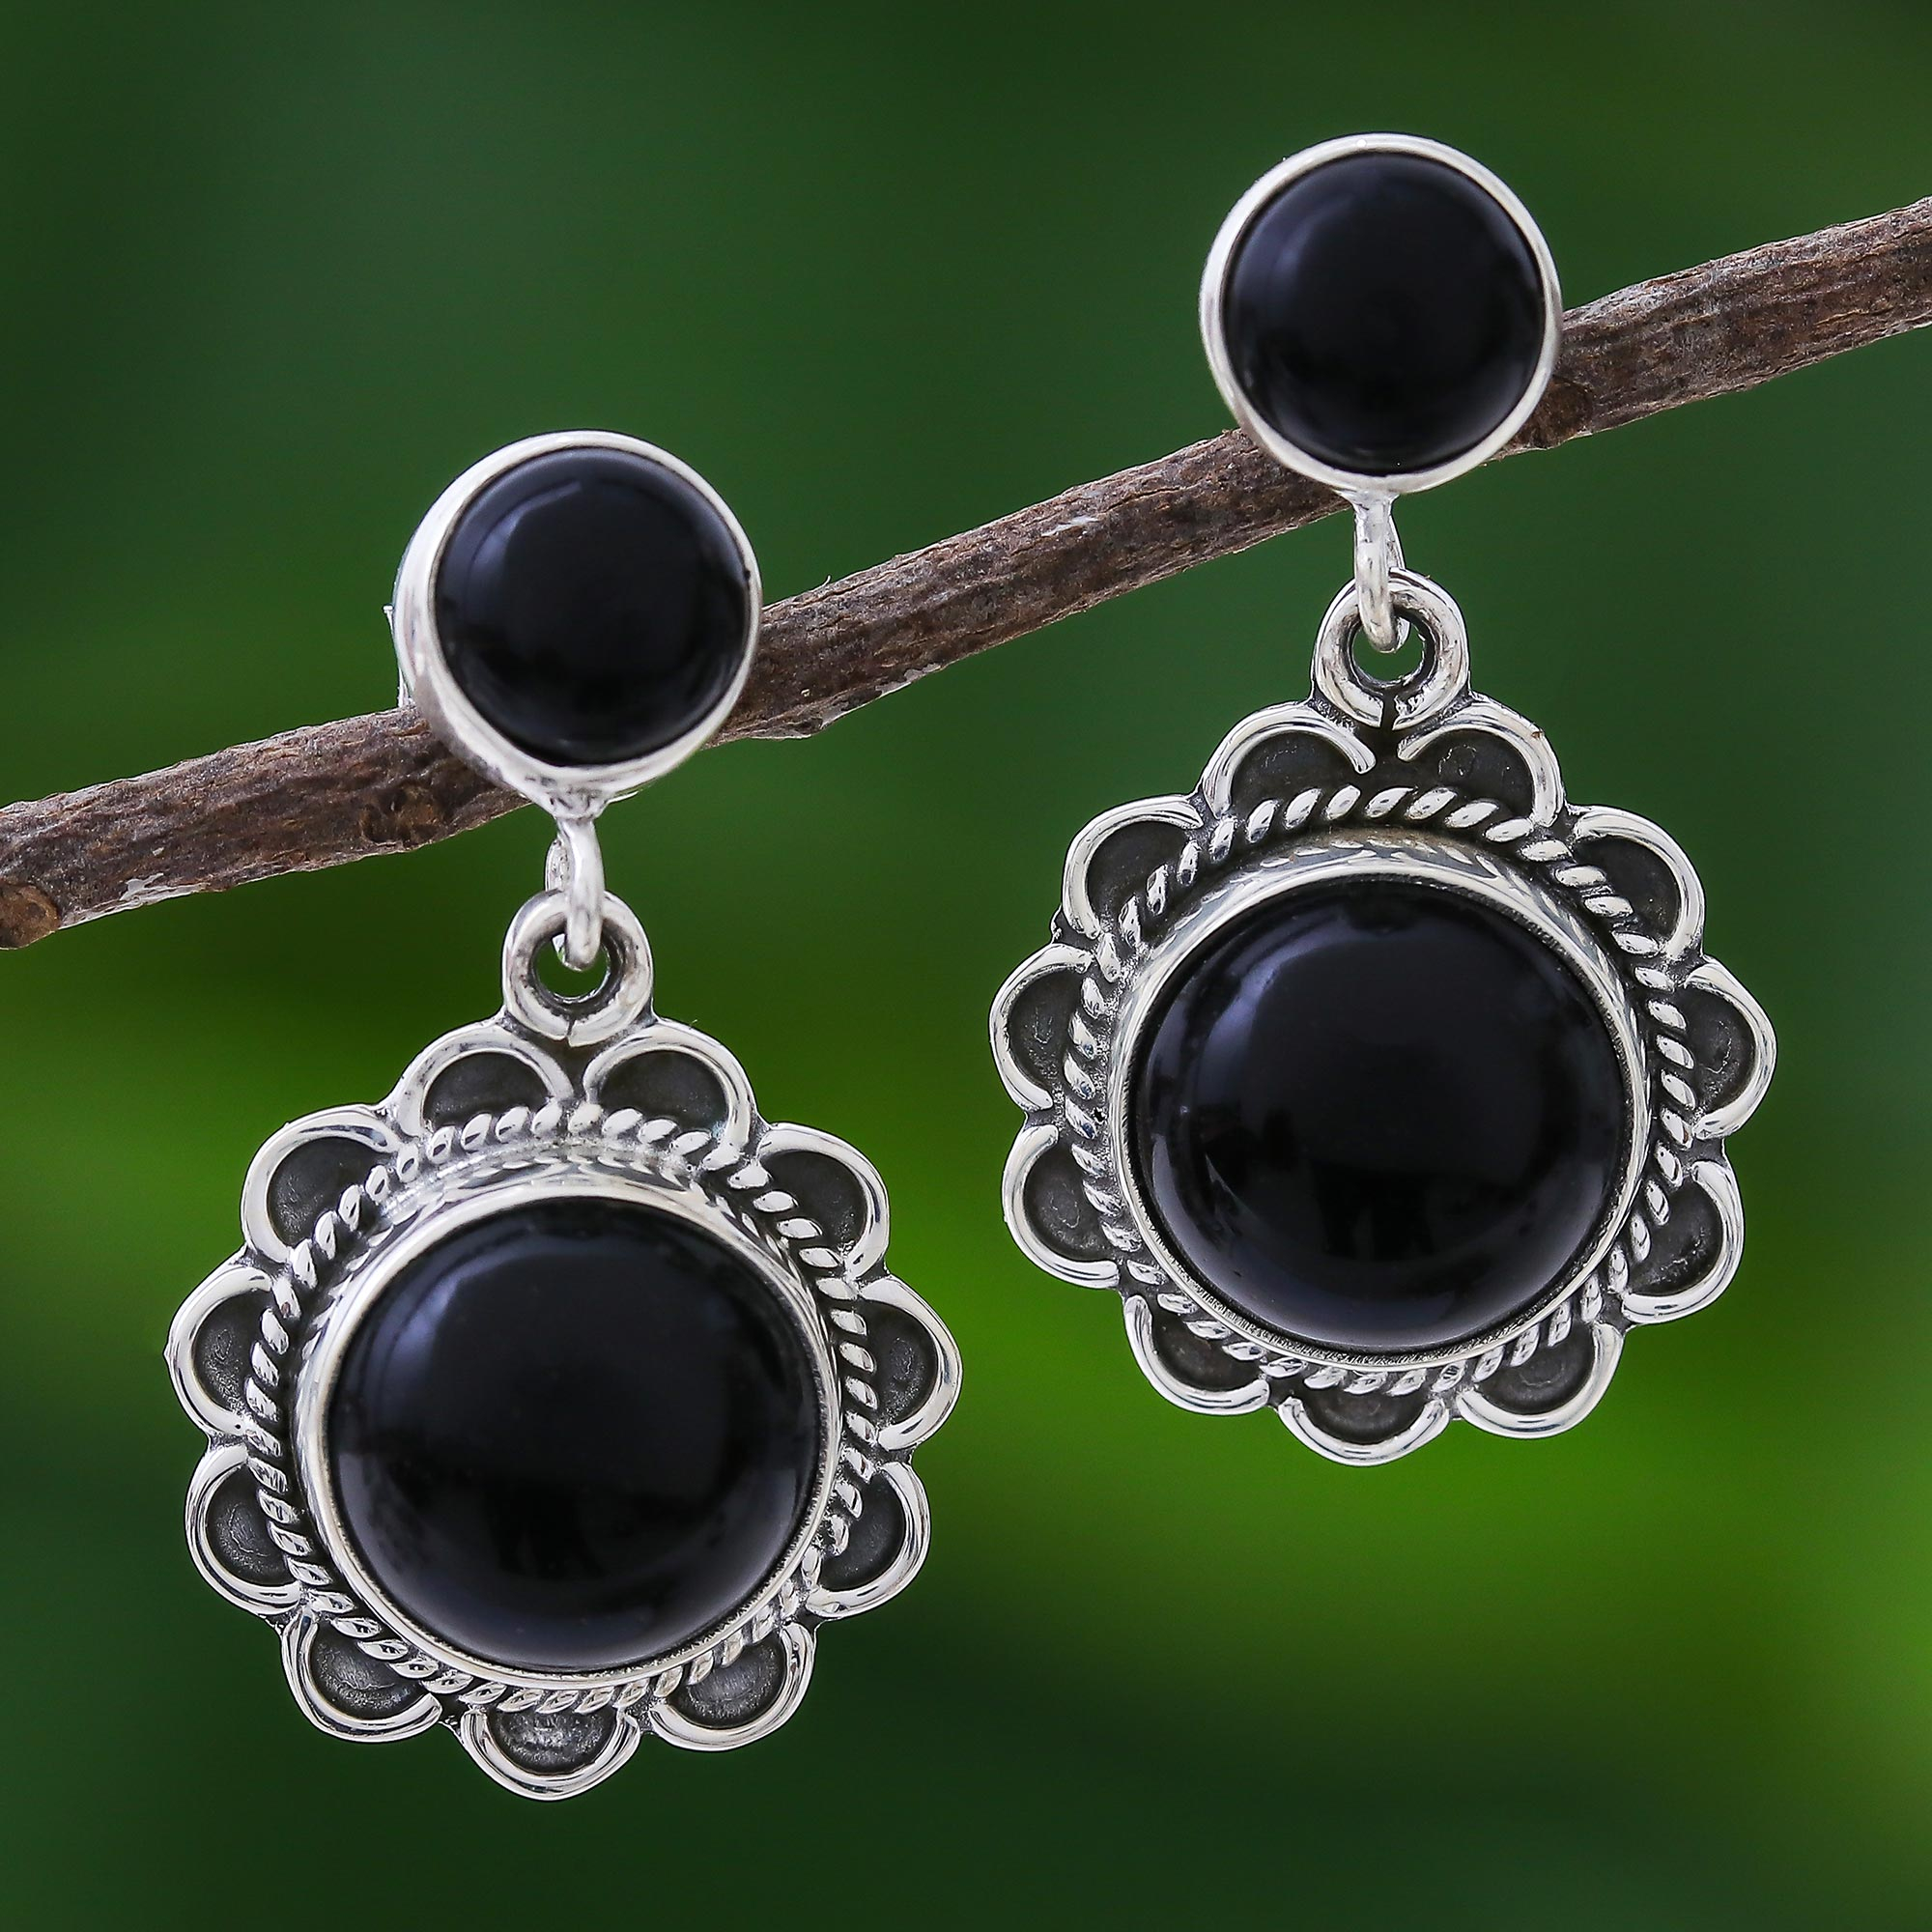 Handmade in 925 Sterling Silver Black Onyx Tear Drop Earrings With Gift Bag